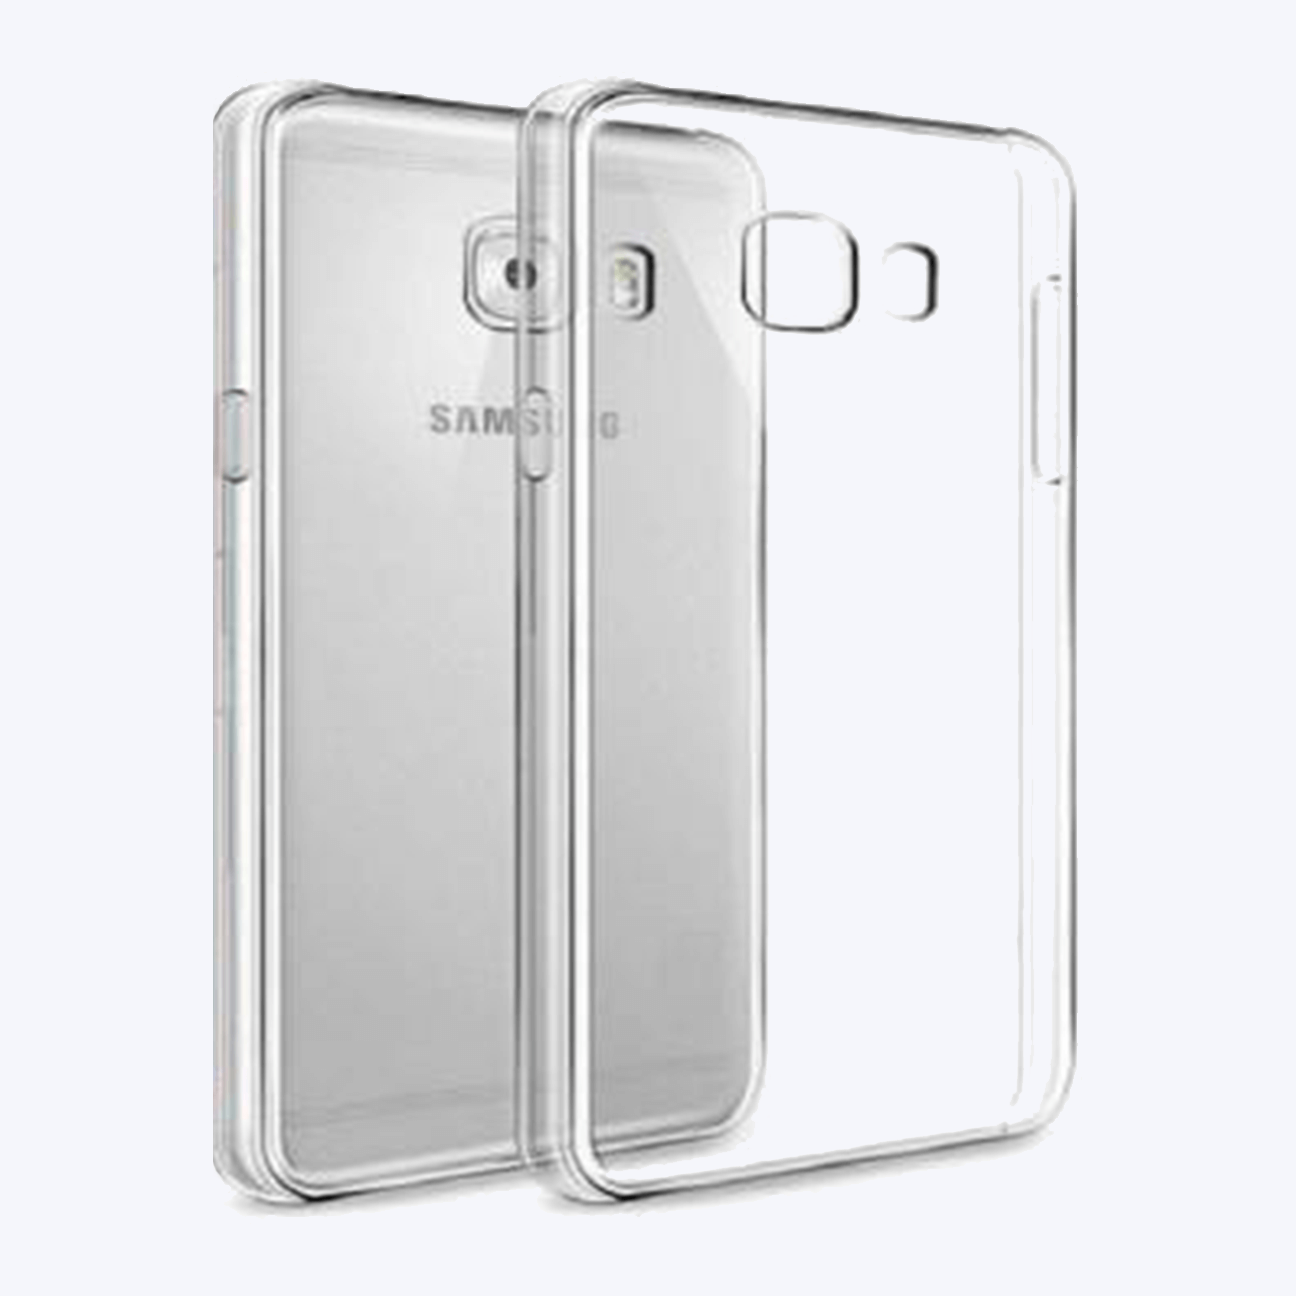 Samsung Galaxy C9 Pro Transparent Back Cover